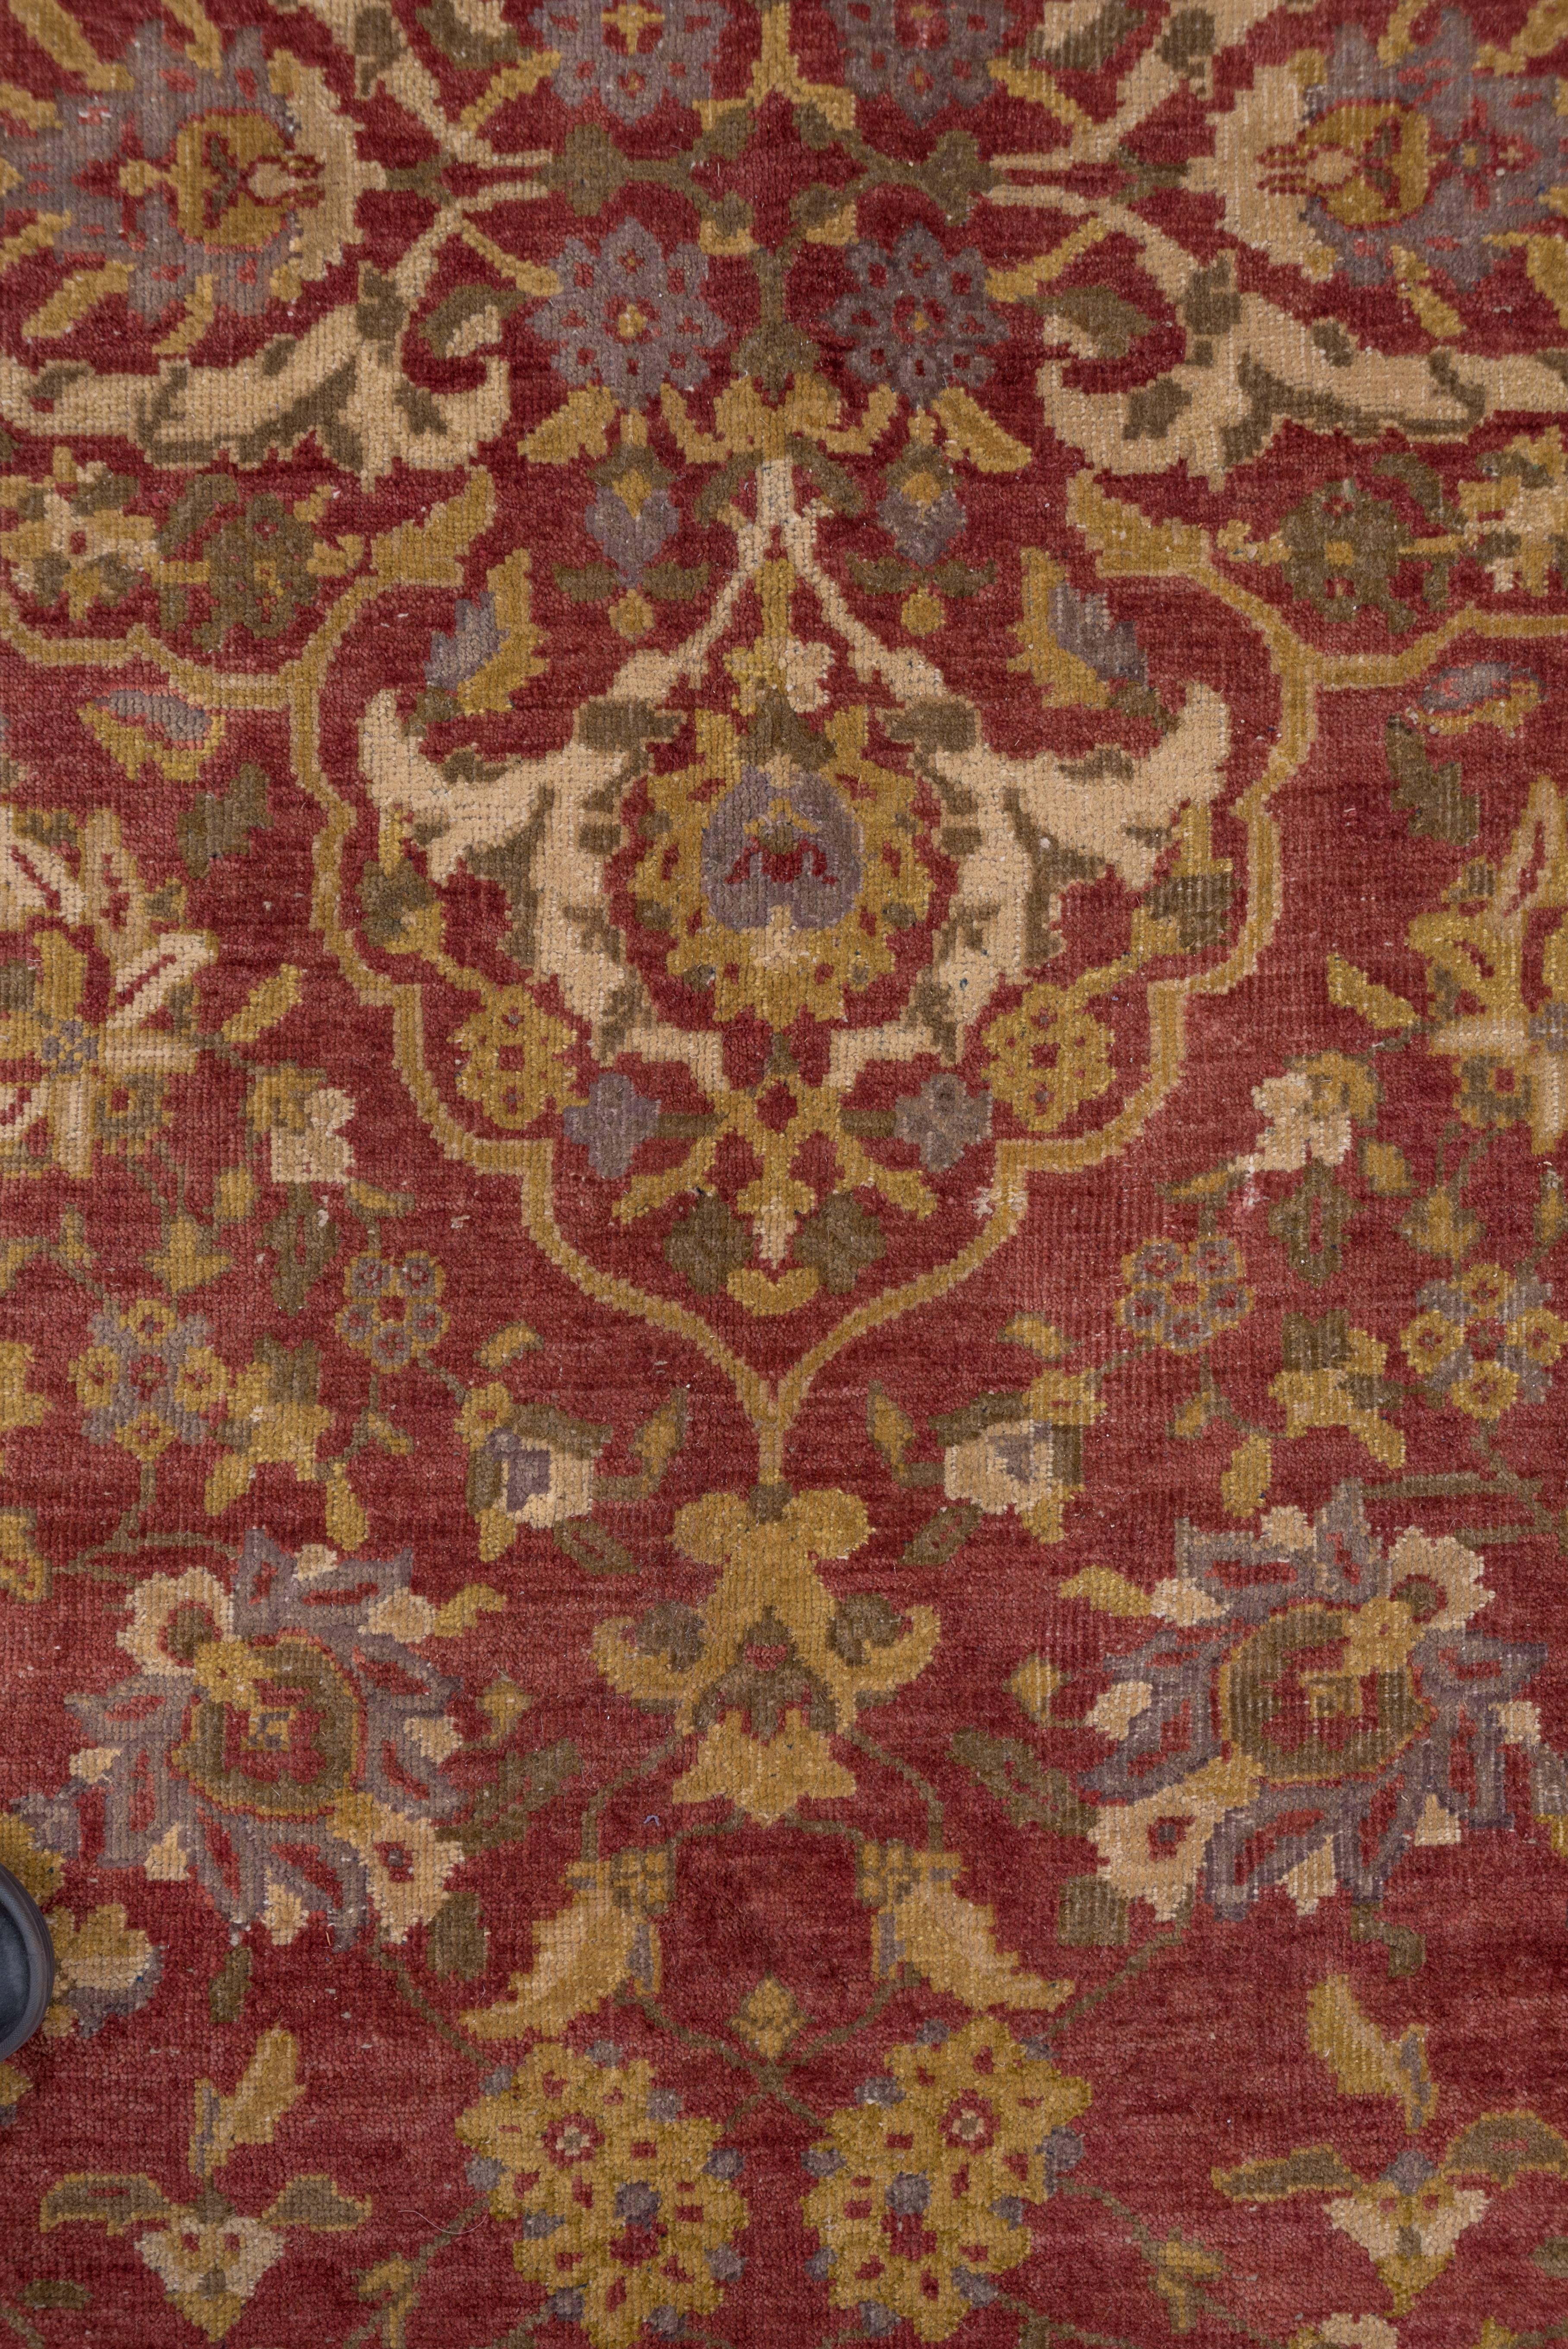 Wool Antique Mahal Carpet, Circa 1920s, Red Field